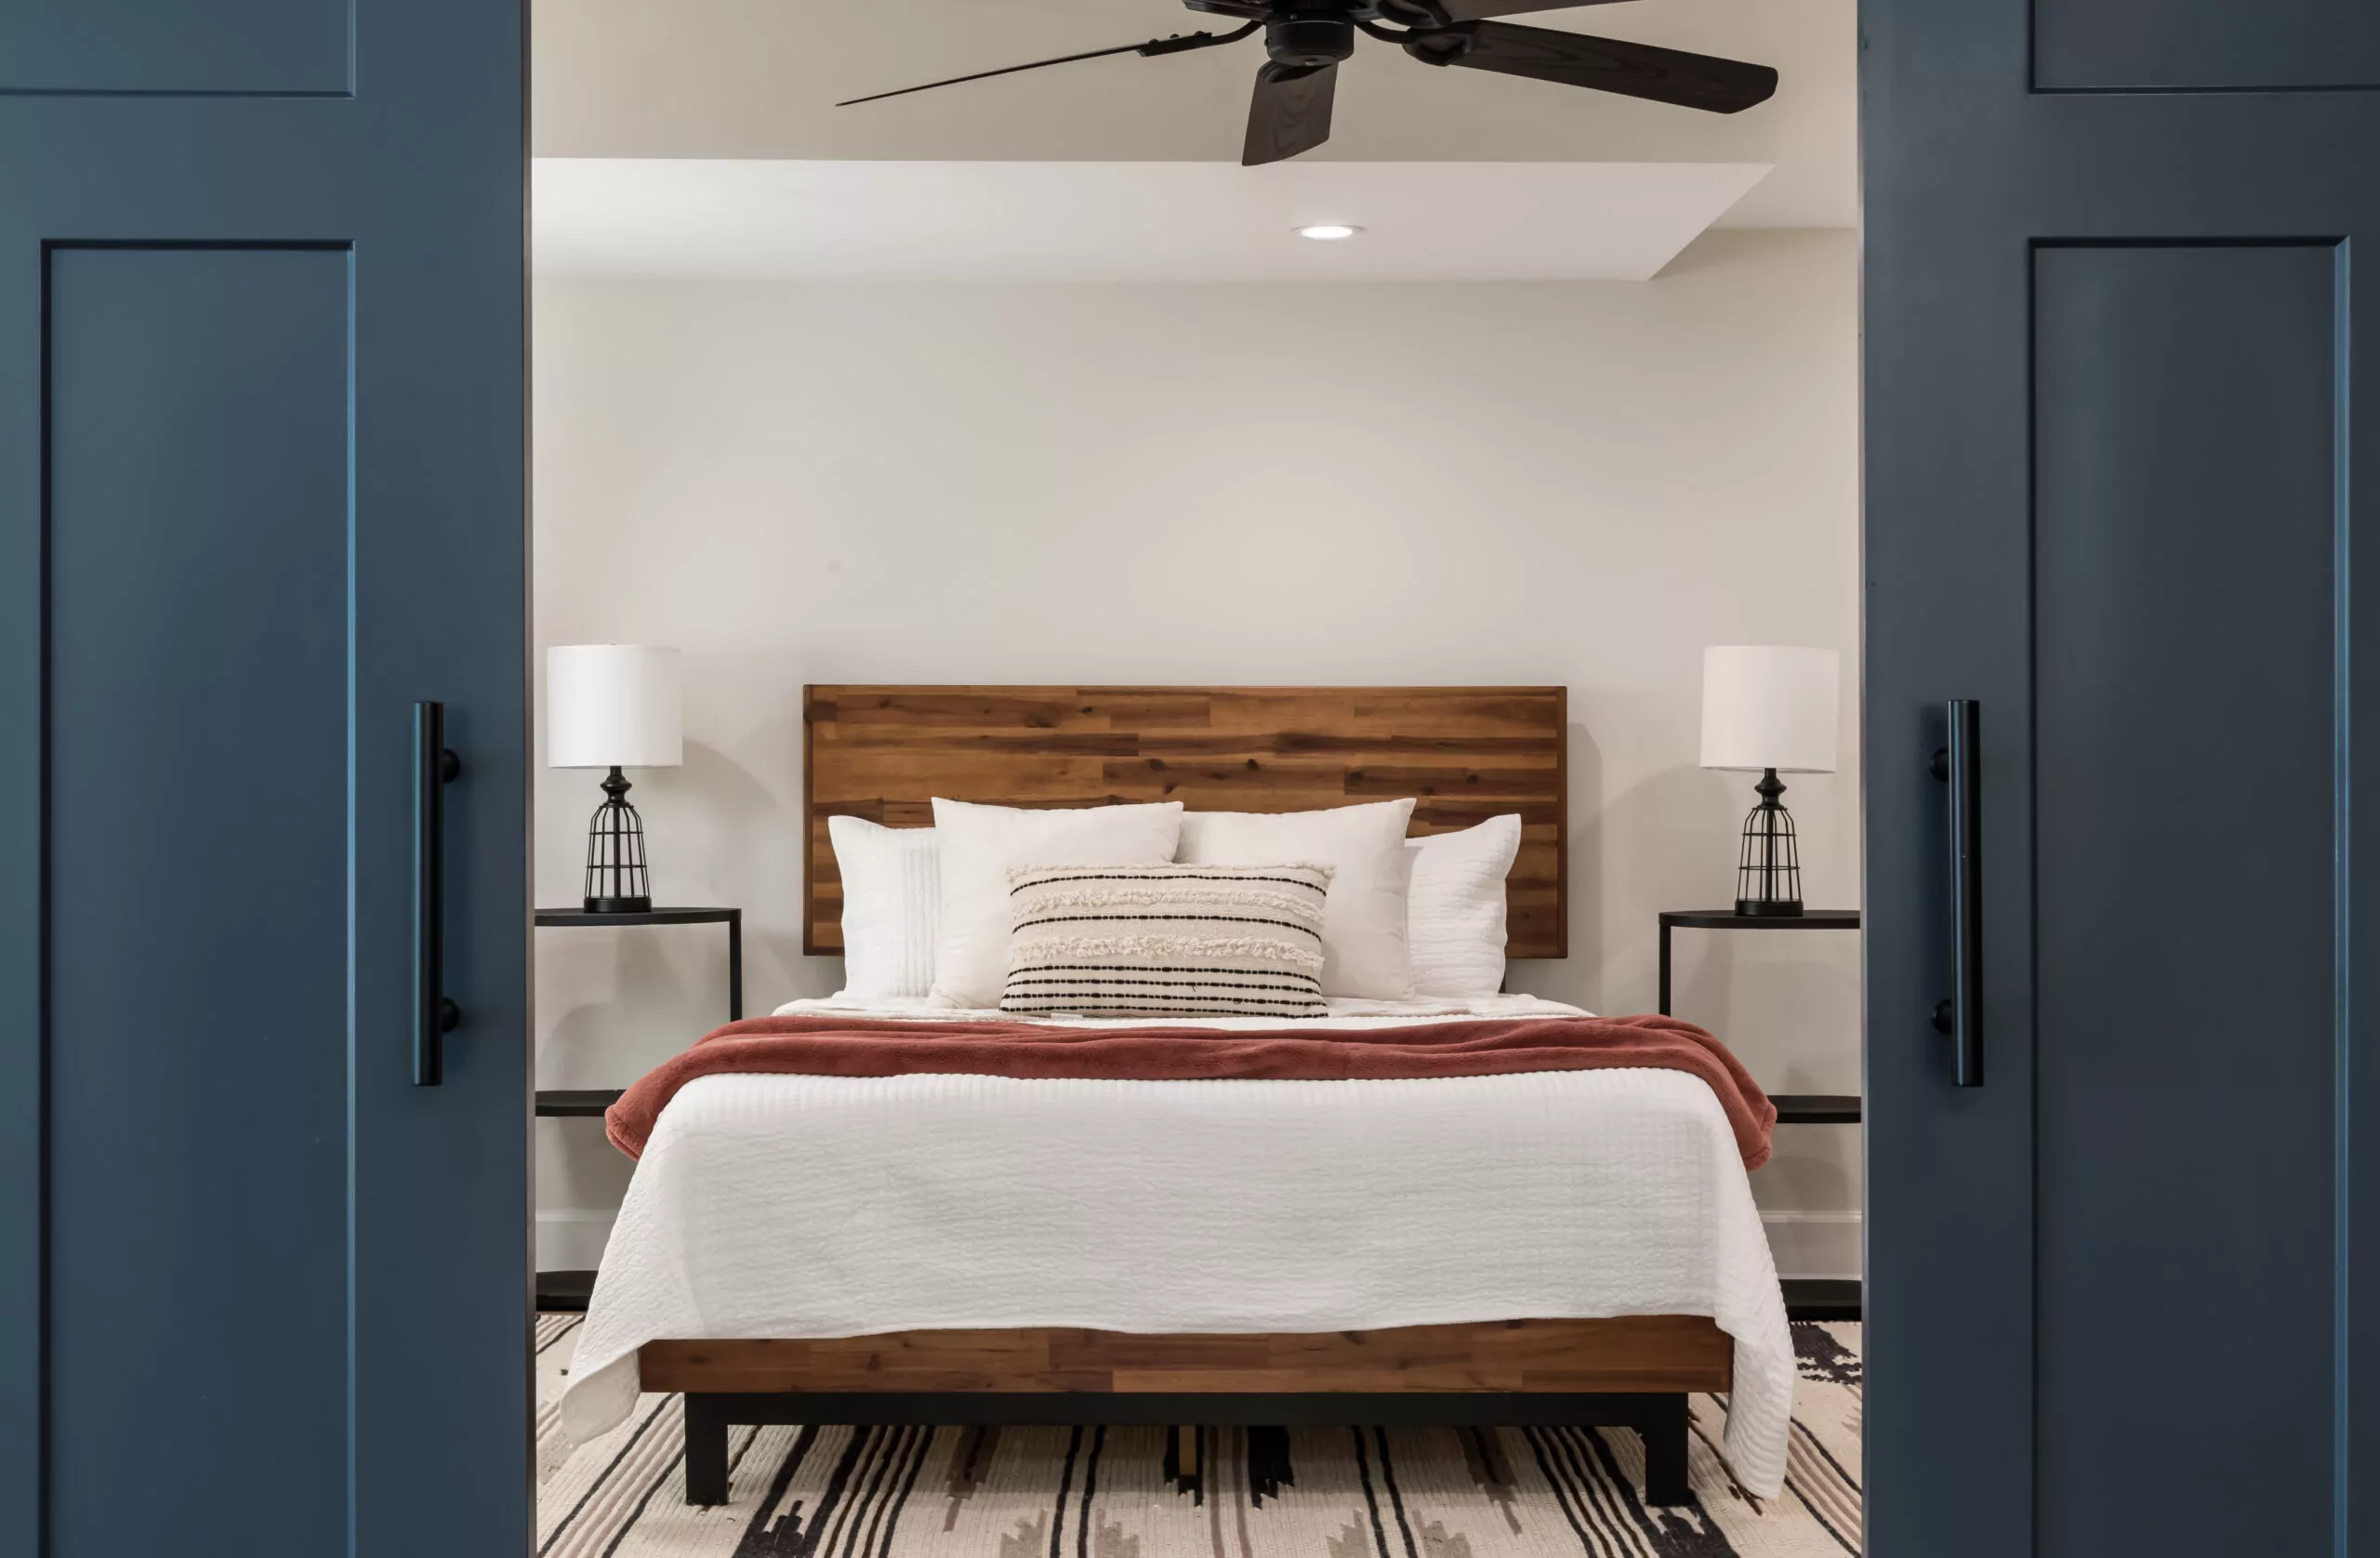 New guest bedroom design with sleek features